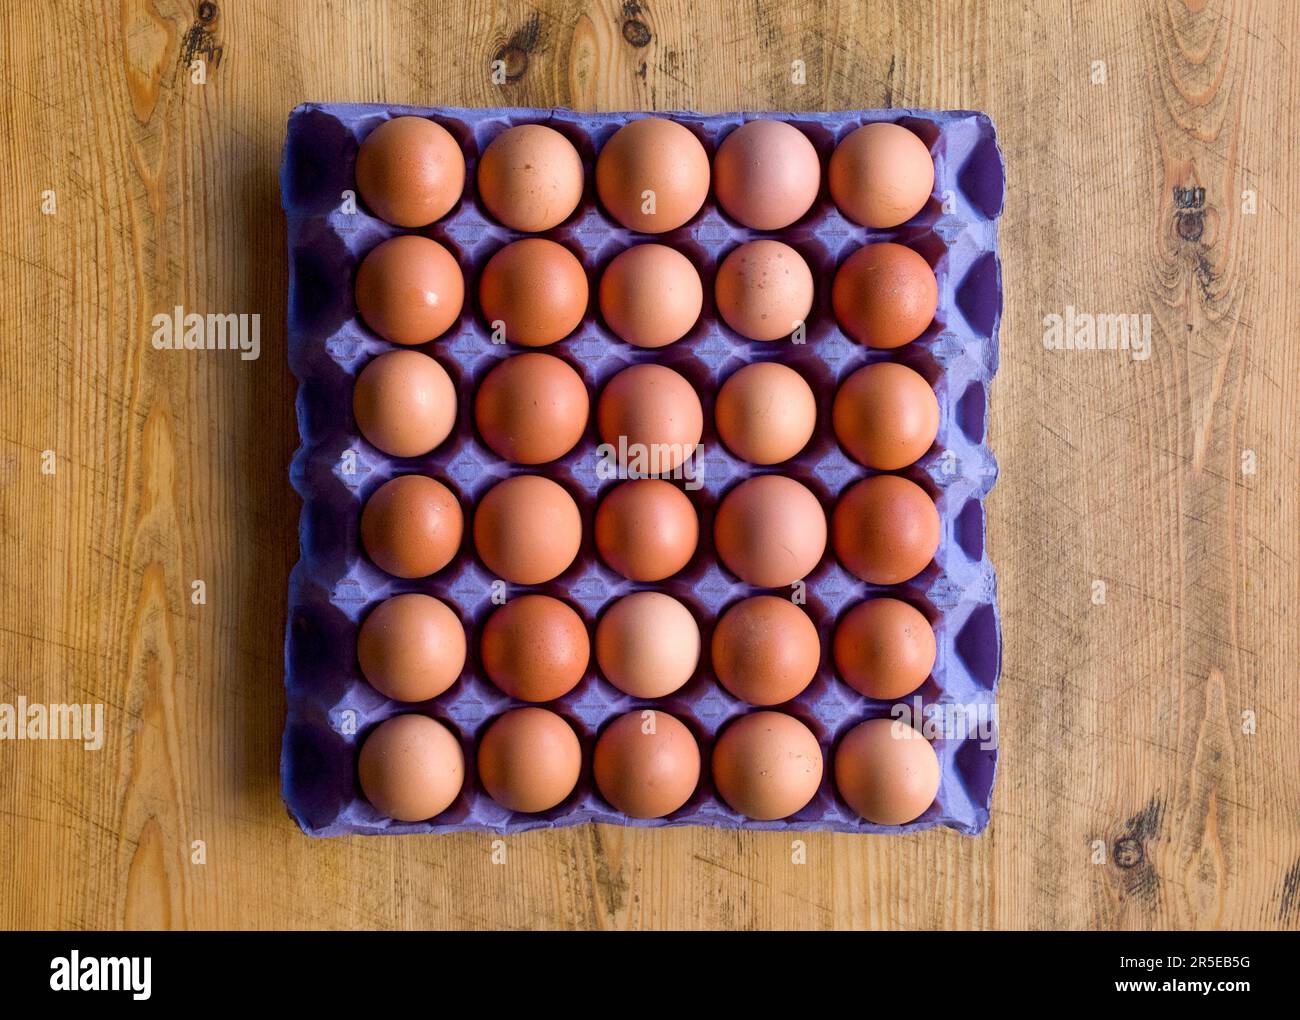 30 uova di gallina in un vassoio di cartone blu Foto Stock